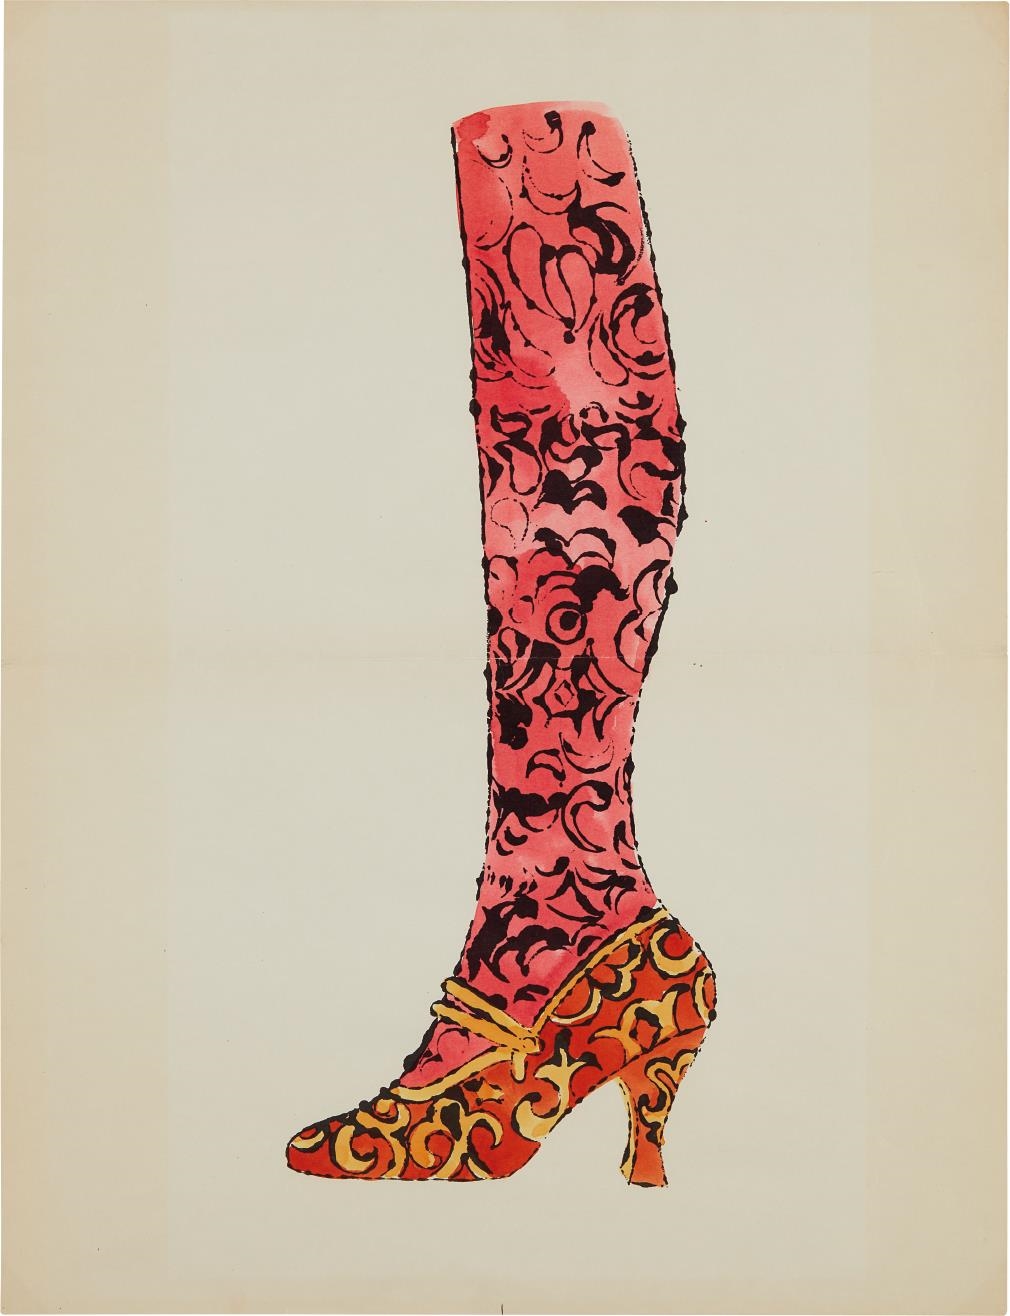 Andy Warhol, Tattooed Woman (1955)